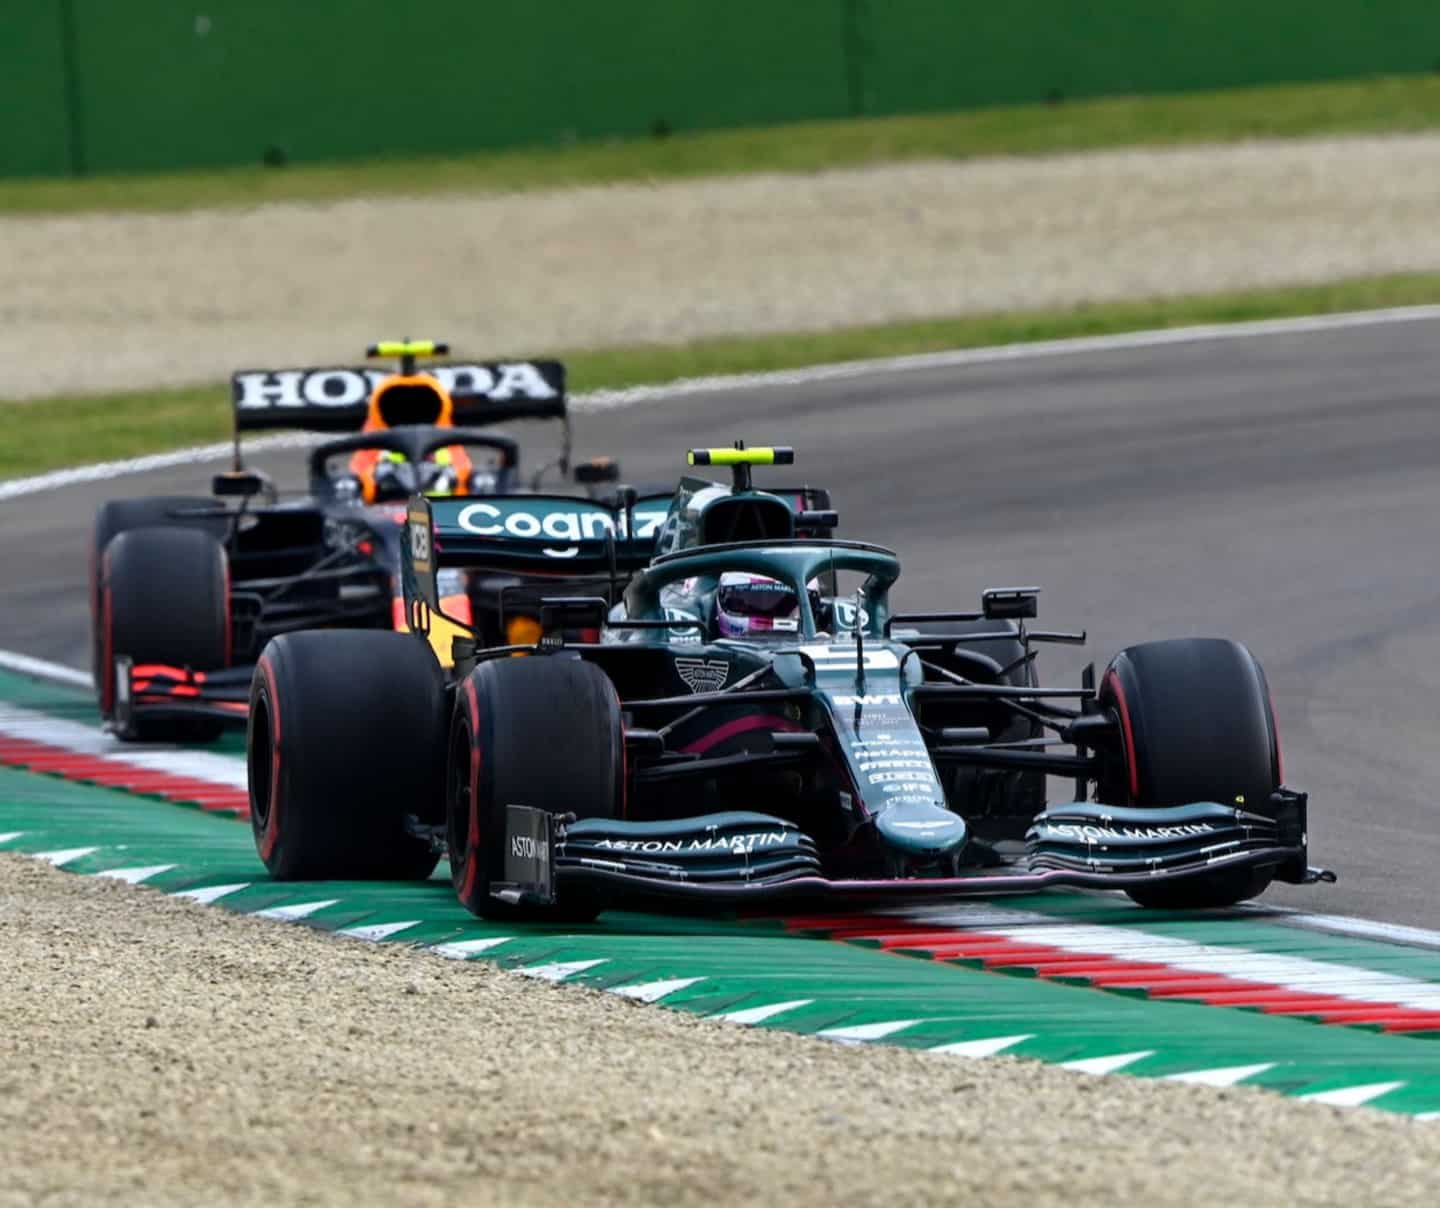 2021 Emilia Romagna Grand Prix, Sunday - Sebastian Vettel